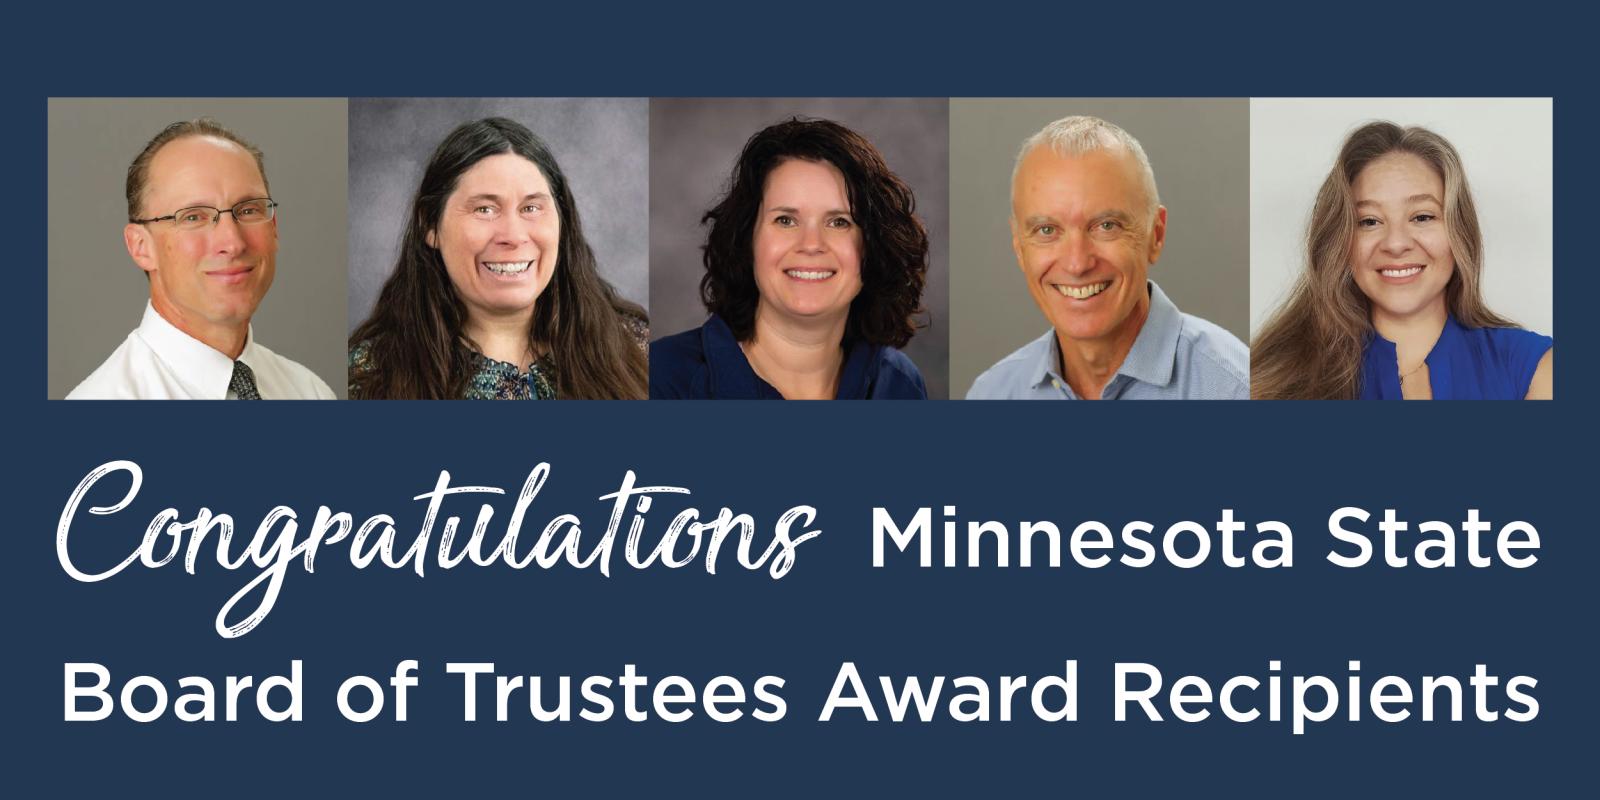 Congratulations Minnesota State Board of Trustees Award Recipients